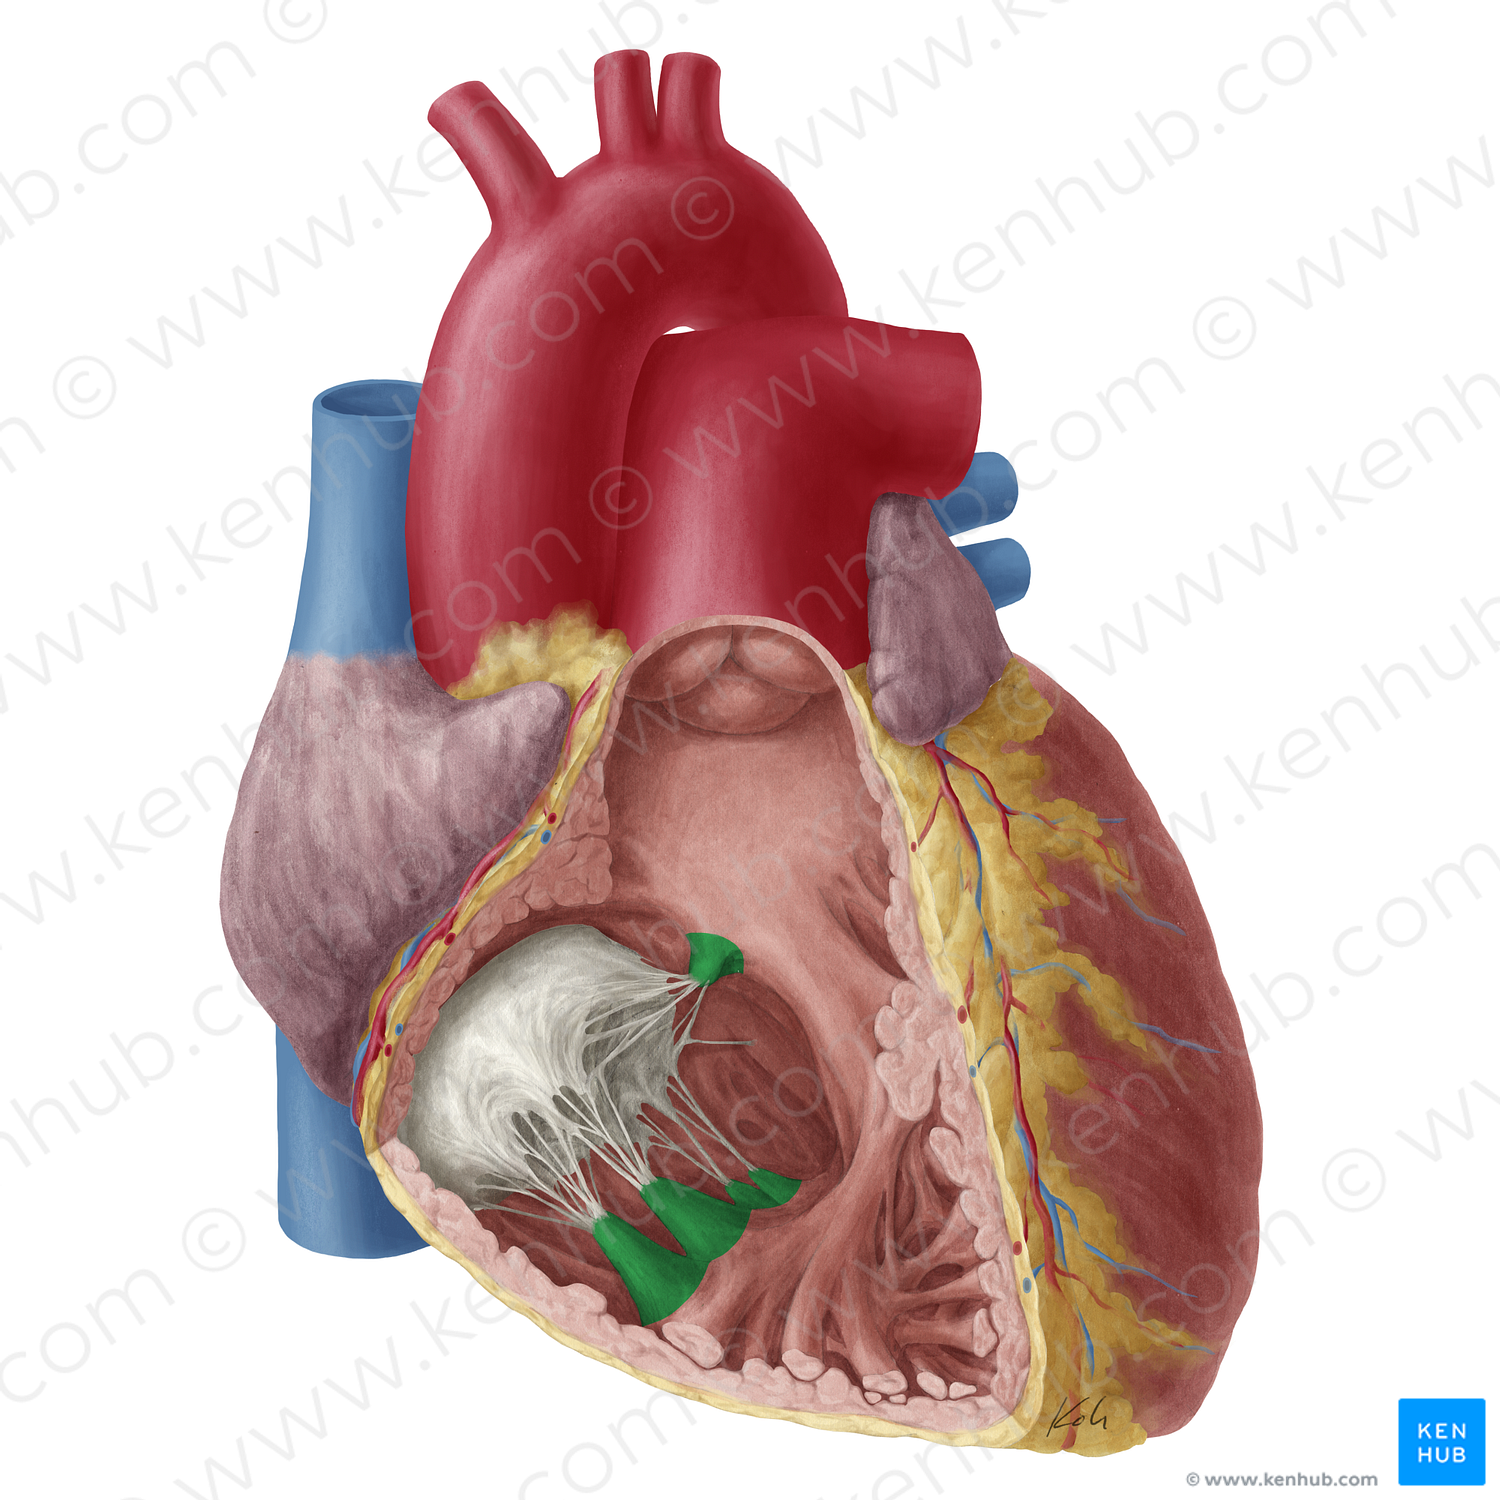 Papillary muscles of heart (#19744)